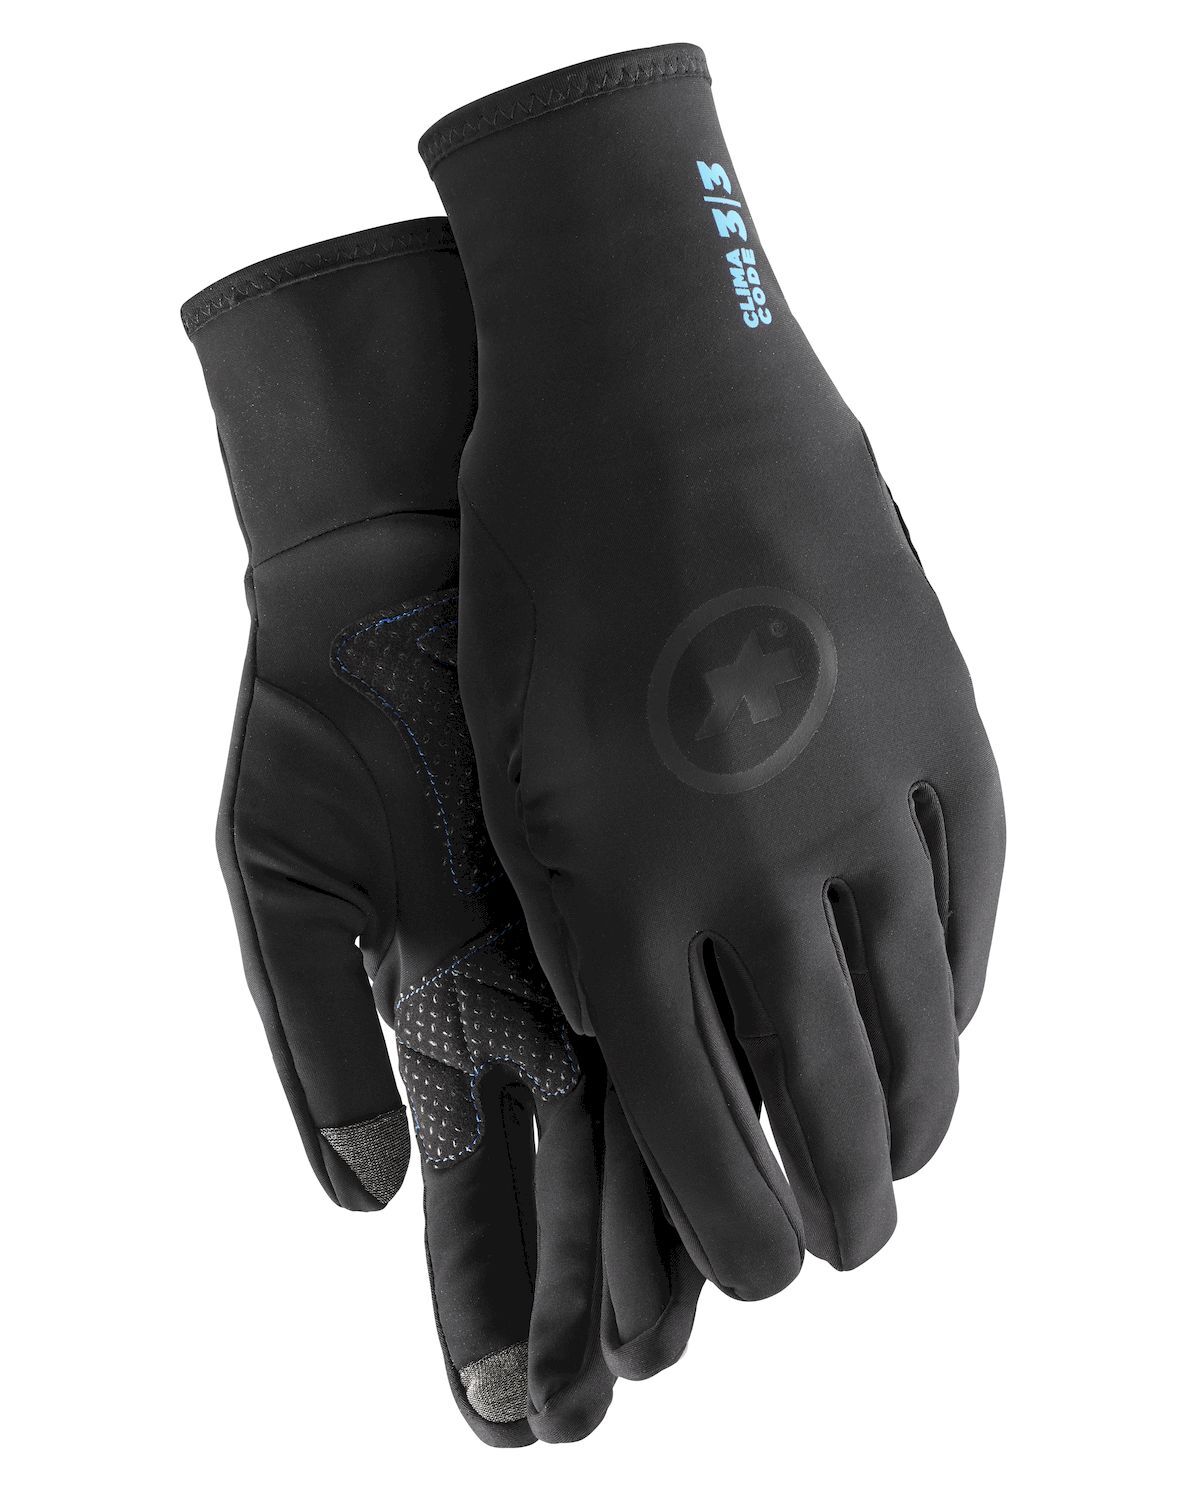 Assos Winter Gloves EVO - Cycling gloves